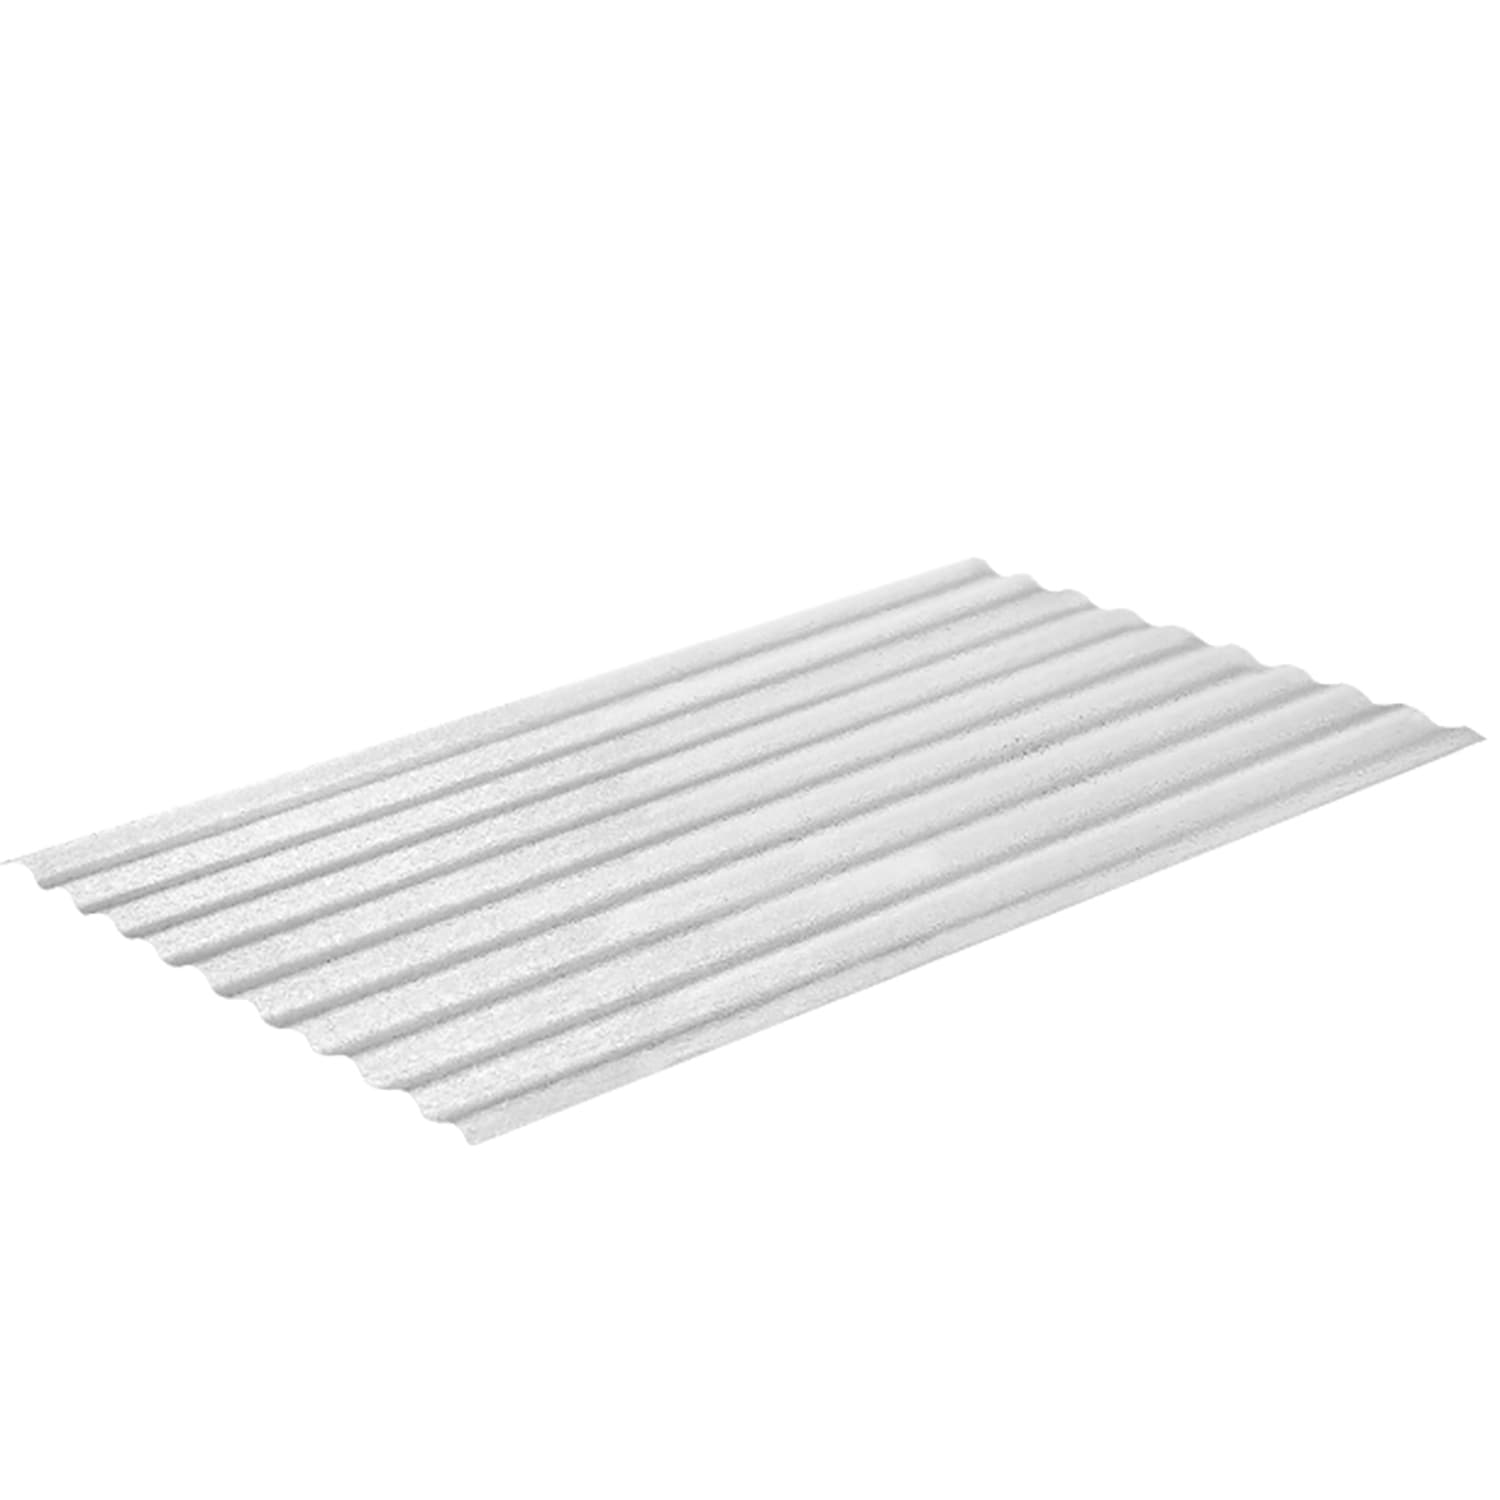 Expanded PVC Foam Board, White, 1/4 (0.25, 6MM) Thick, 18 W x 48 L